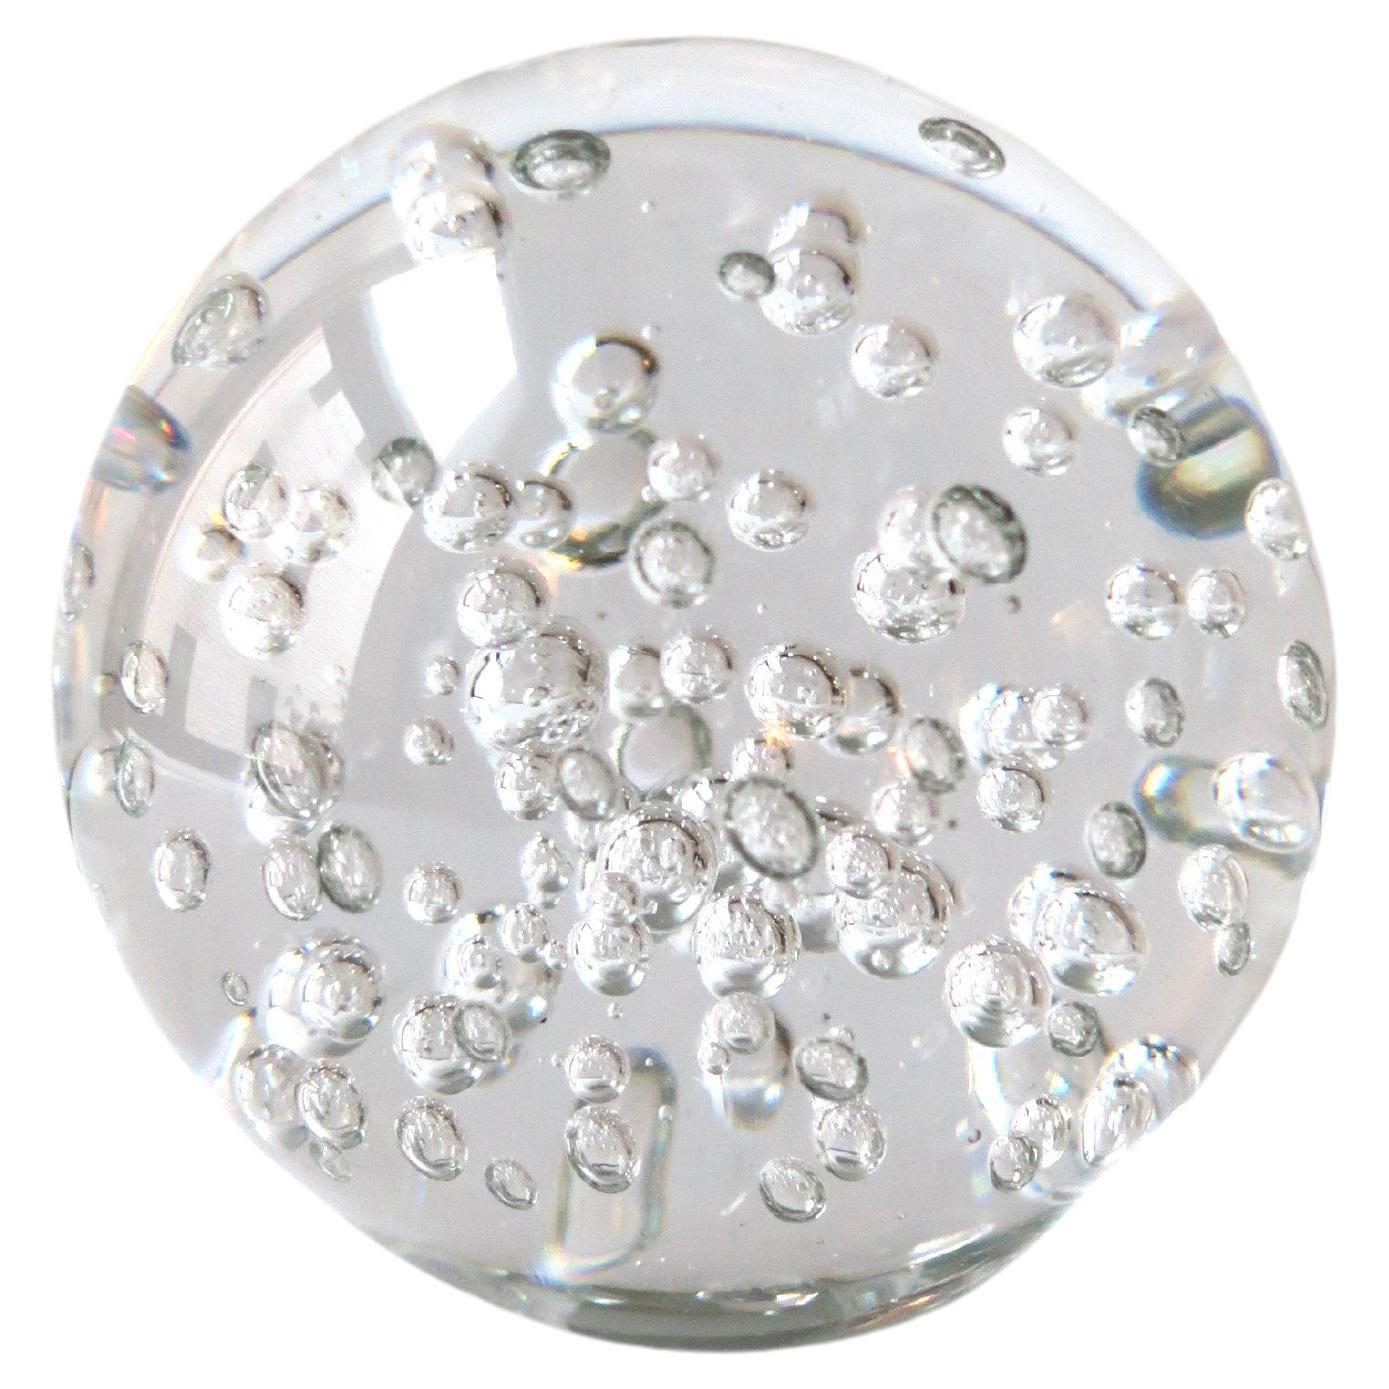 Sphère Ball and Ball en verre d'art avec am designs/One, large